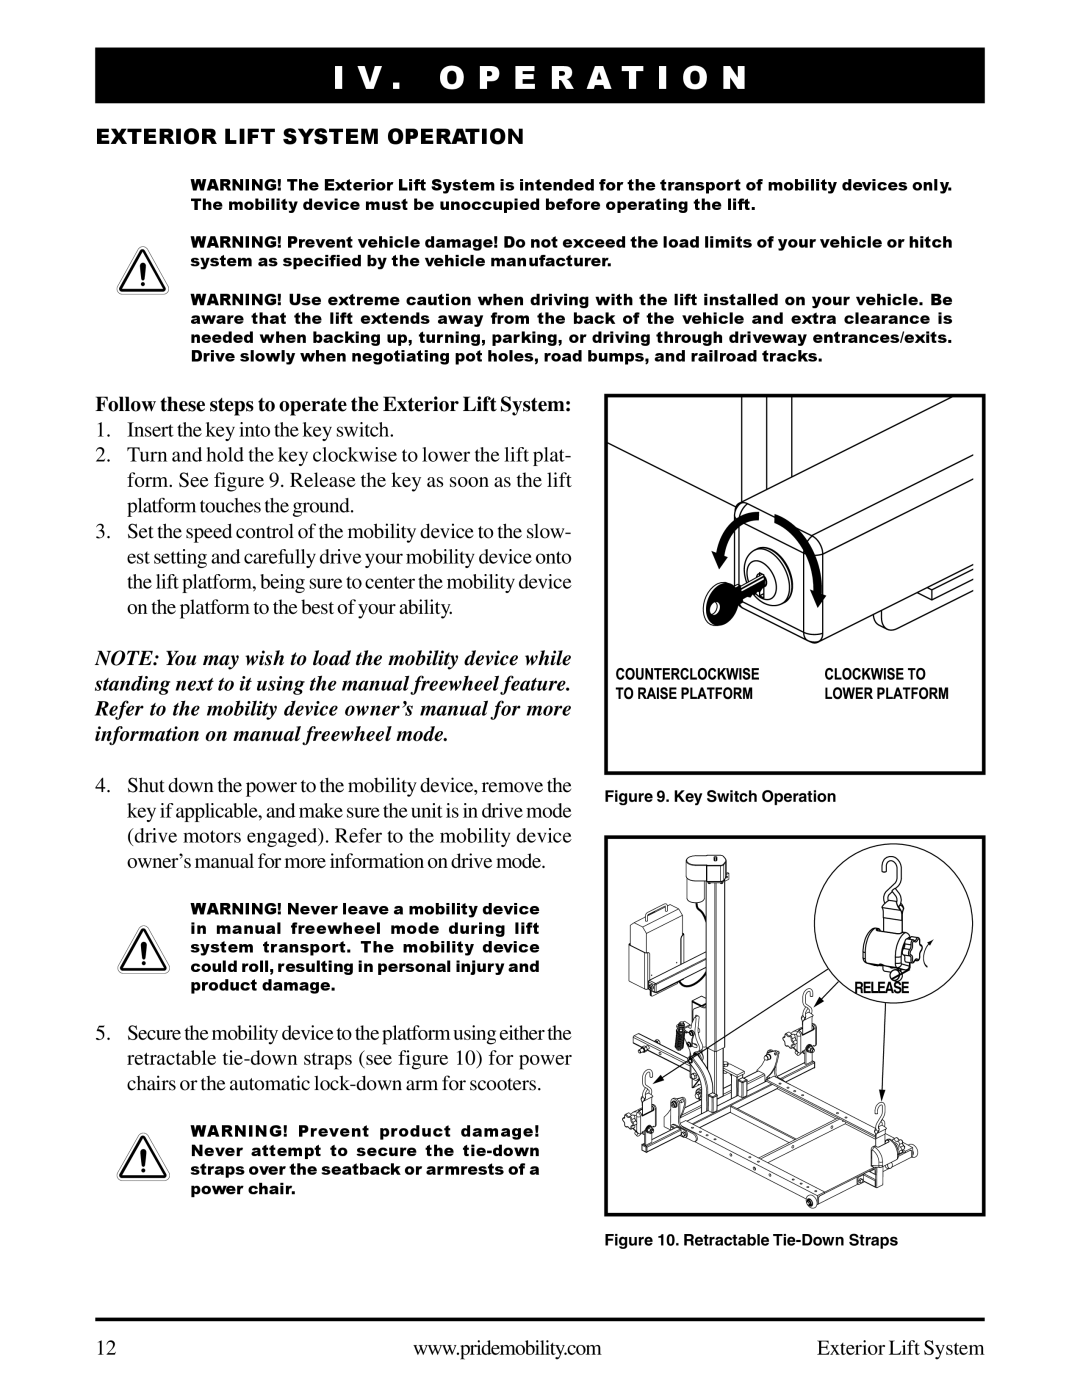 Pride Mobility manual I V . O P E R A T I O N, Exterior Lift System Operation 